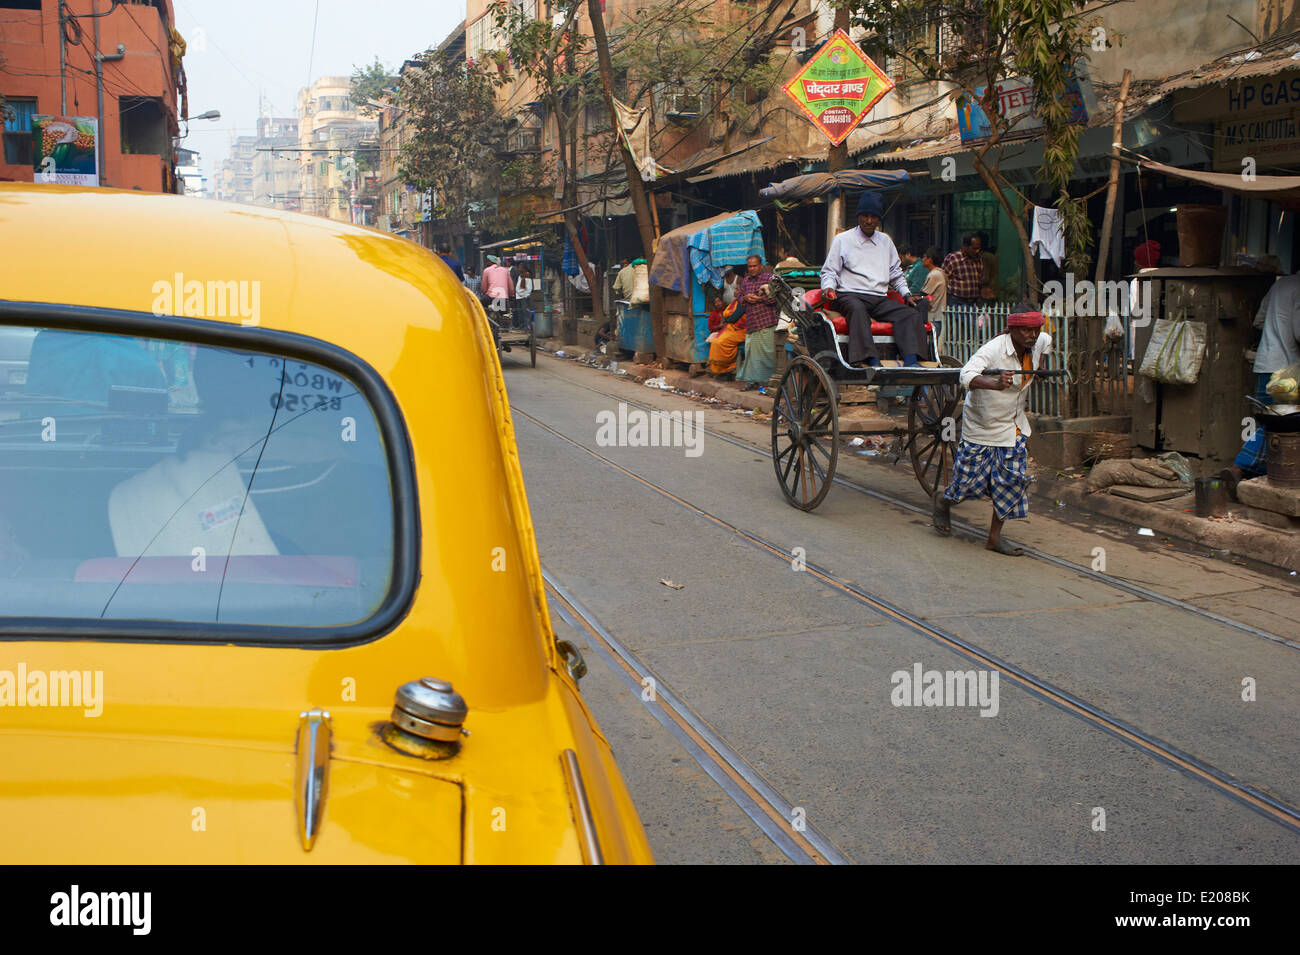 India, West Bengal, Kolkata, Calcutta, rickshaw on the street Stock Photo